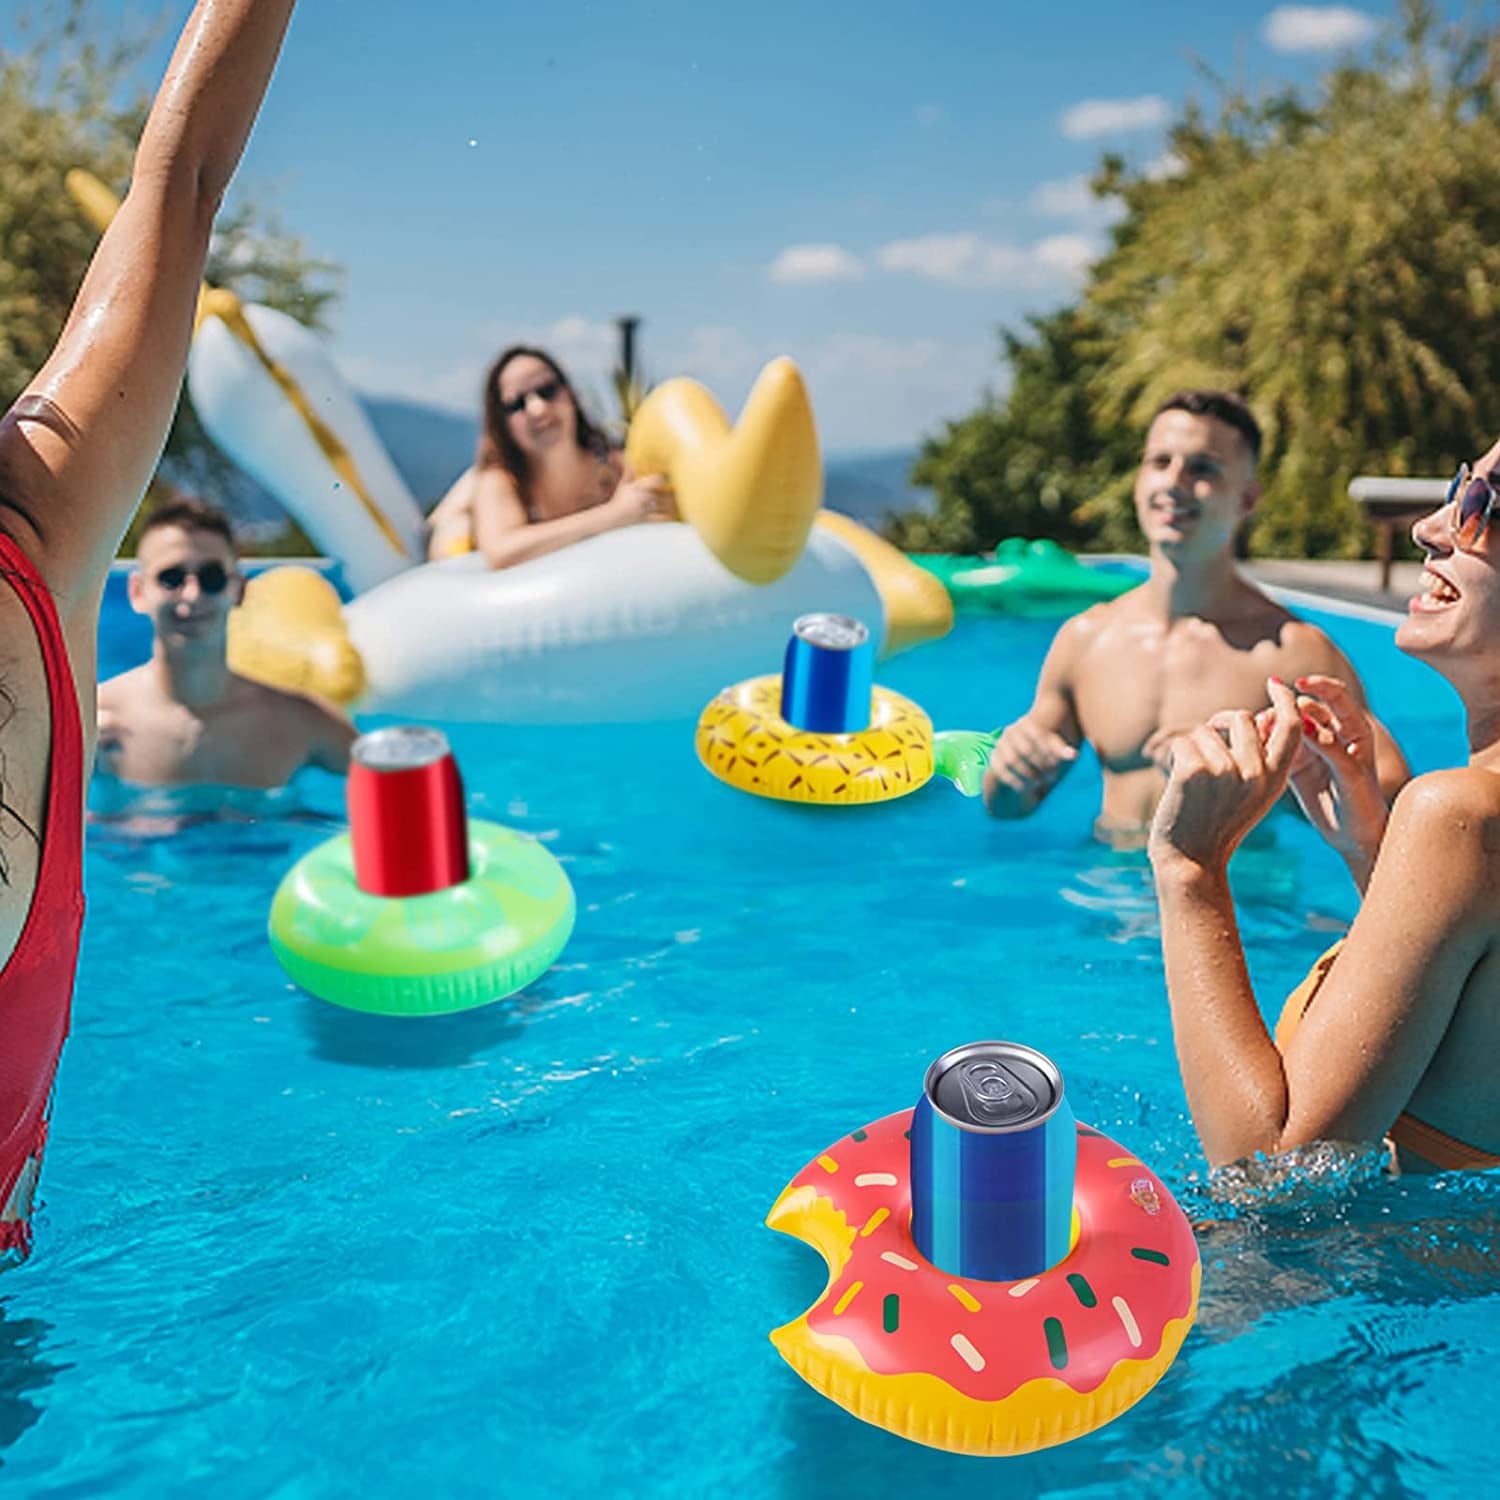 Koogel Inflatable Drink Holders, 10 Packs Floats Cup Holders Floating Drink Holder for Pool Drink Floats Inflatable Cup Coasters for Pool Party Kids Bath Toys